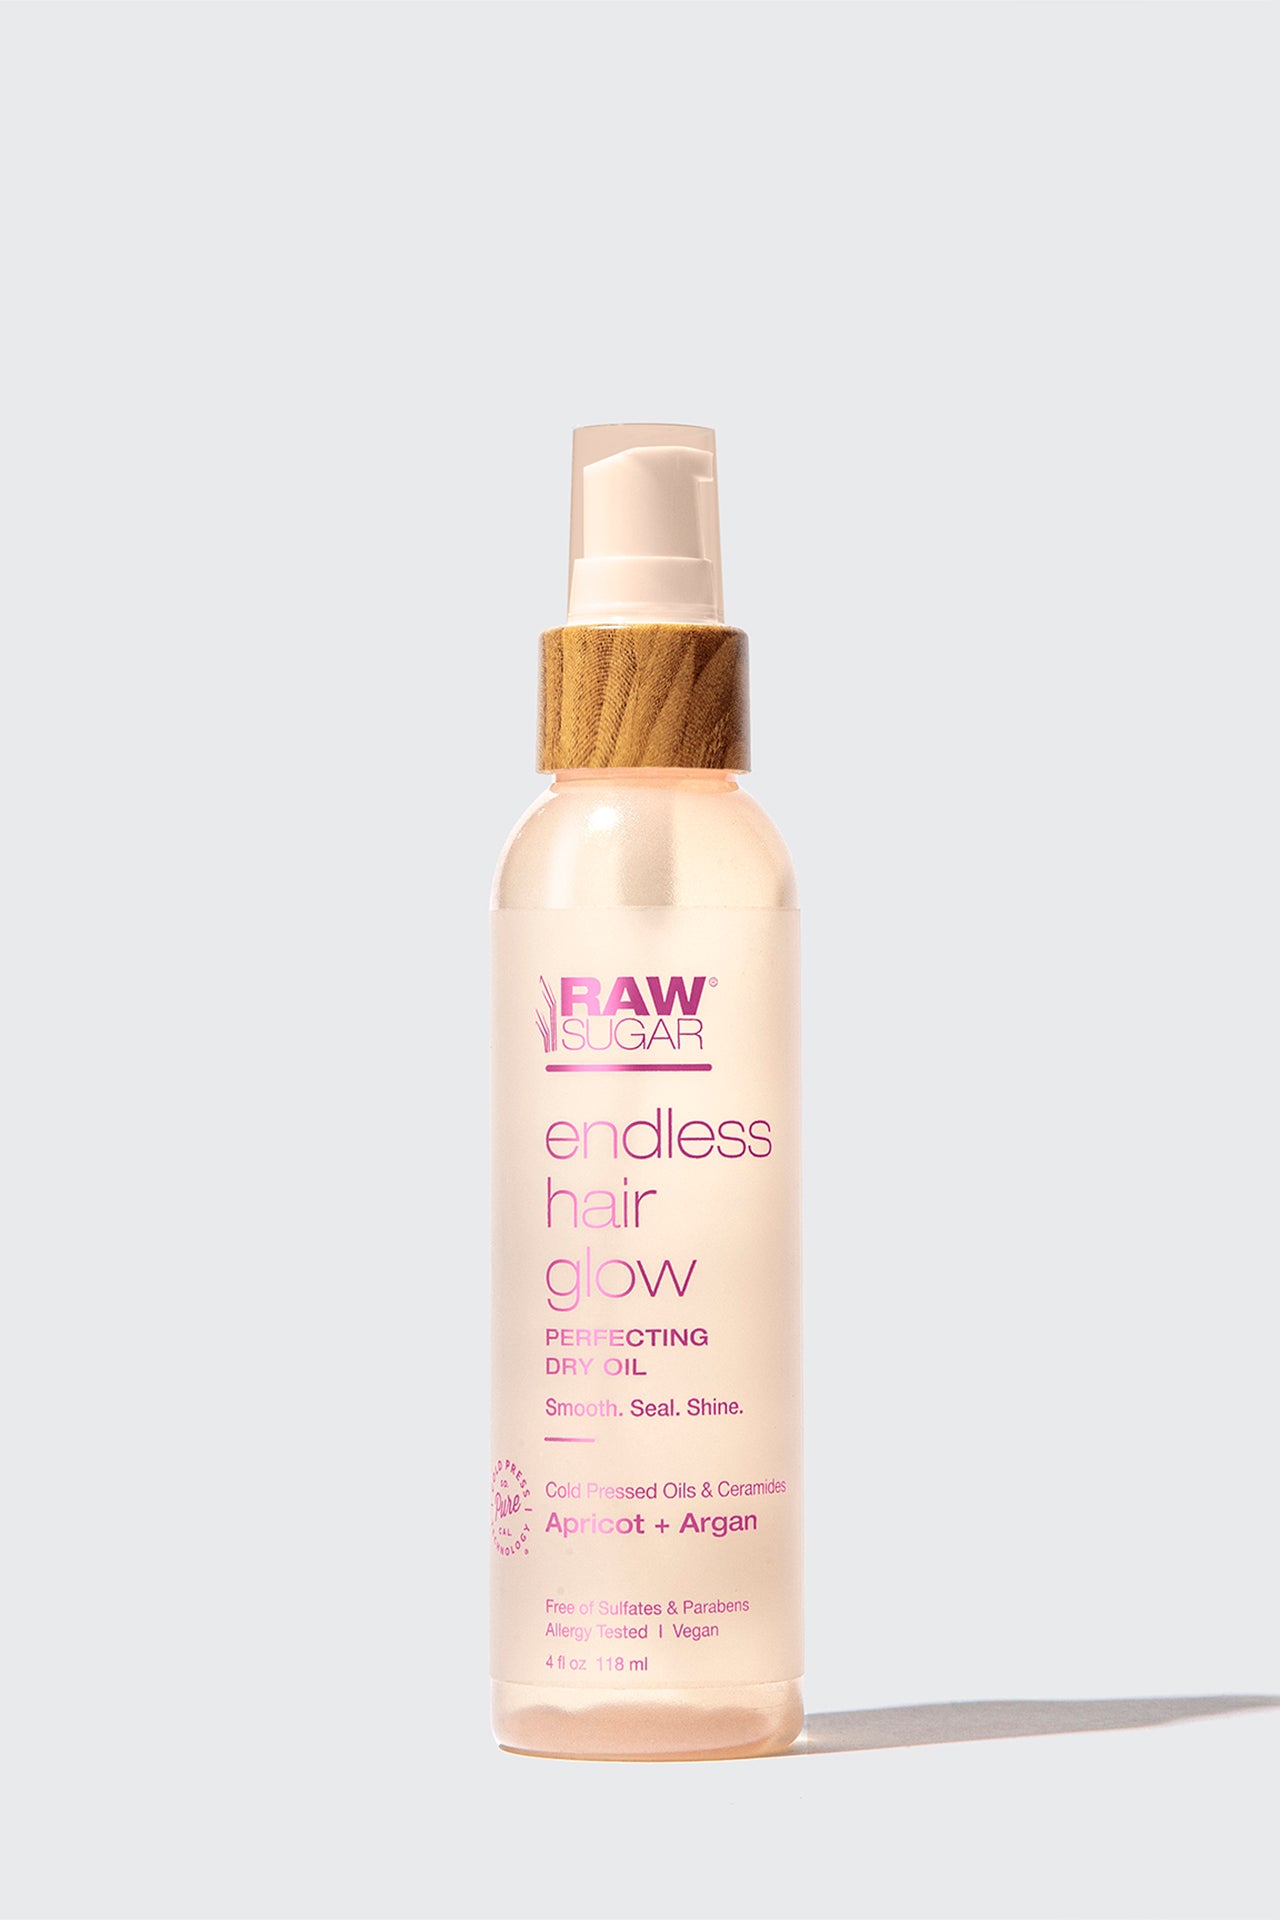 Raw Sugar Perfecting Dry Oil, Endless Hair Glow, Apricot + Argan - 4 fl oz 118 ml